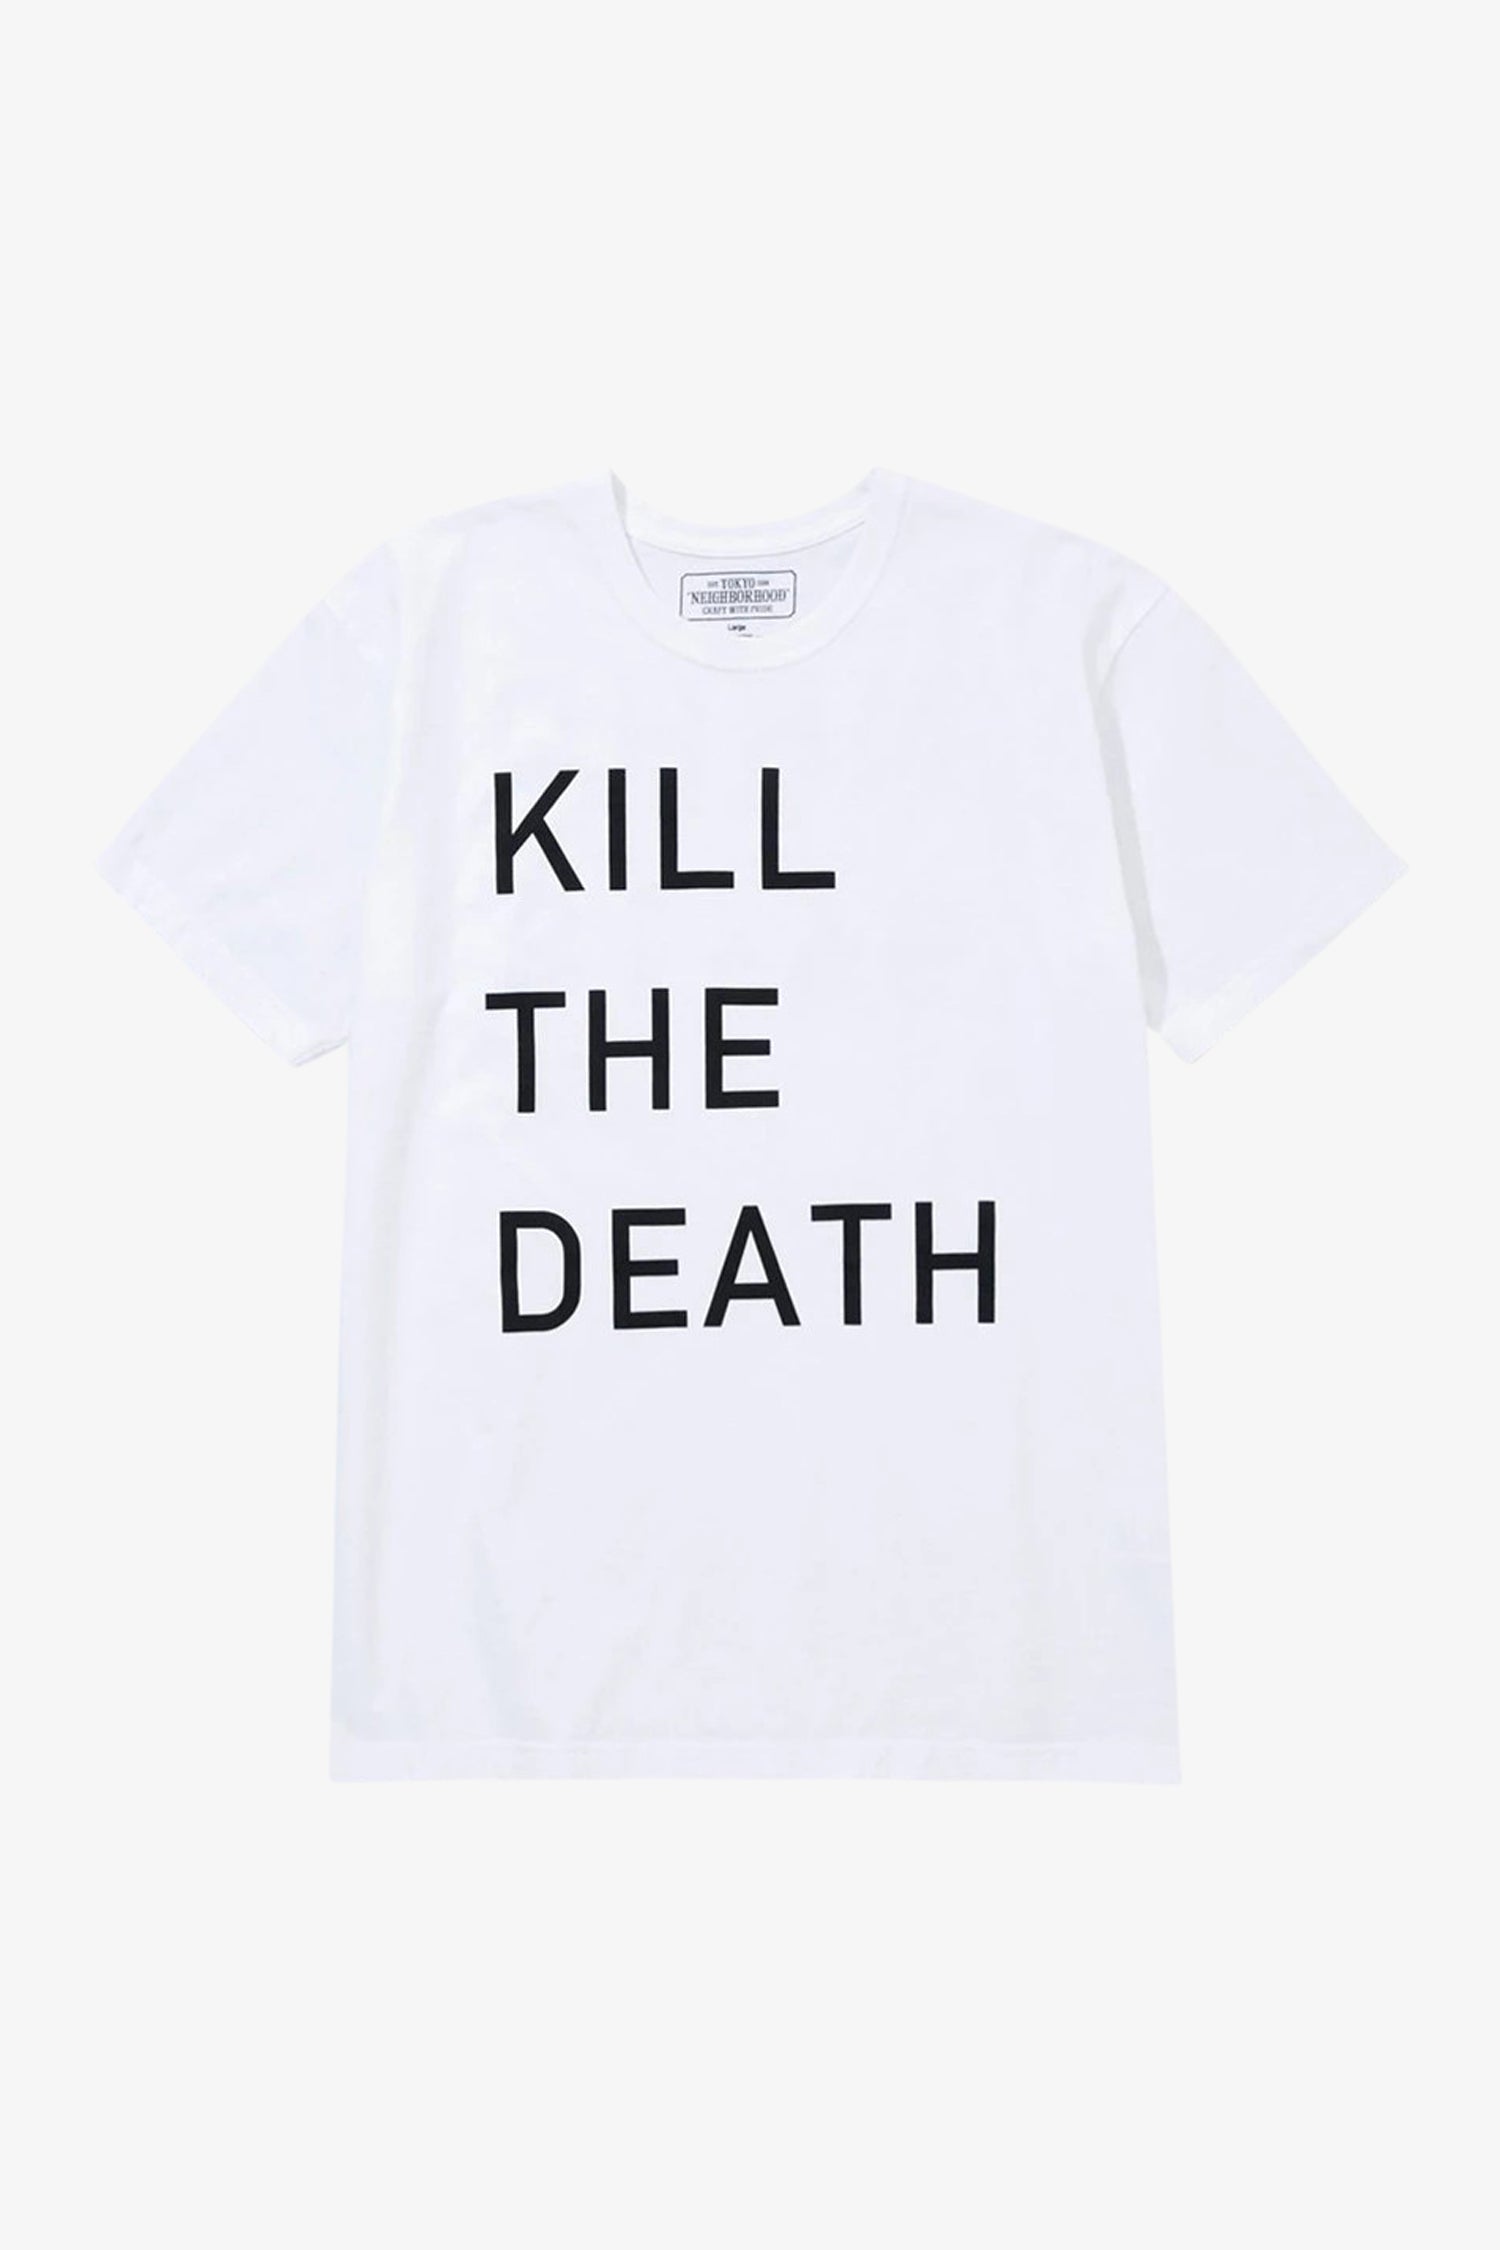 Selectshop FRAME - NEIGHBORHOOD Kill The Death T-Shirt T-Shirt Dubai